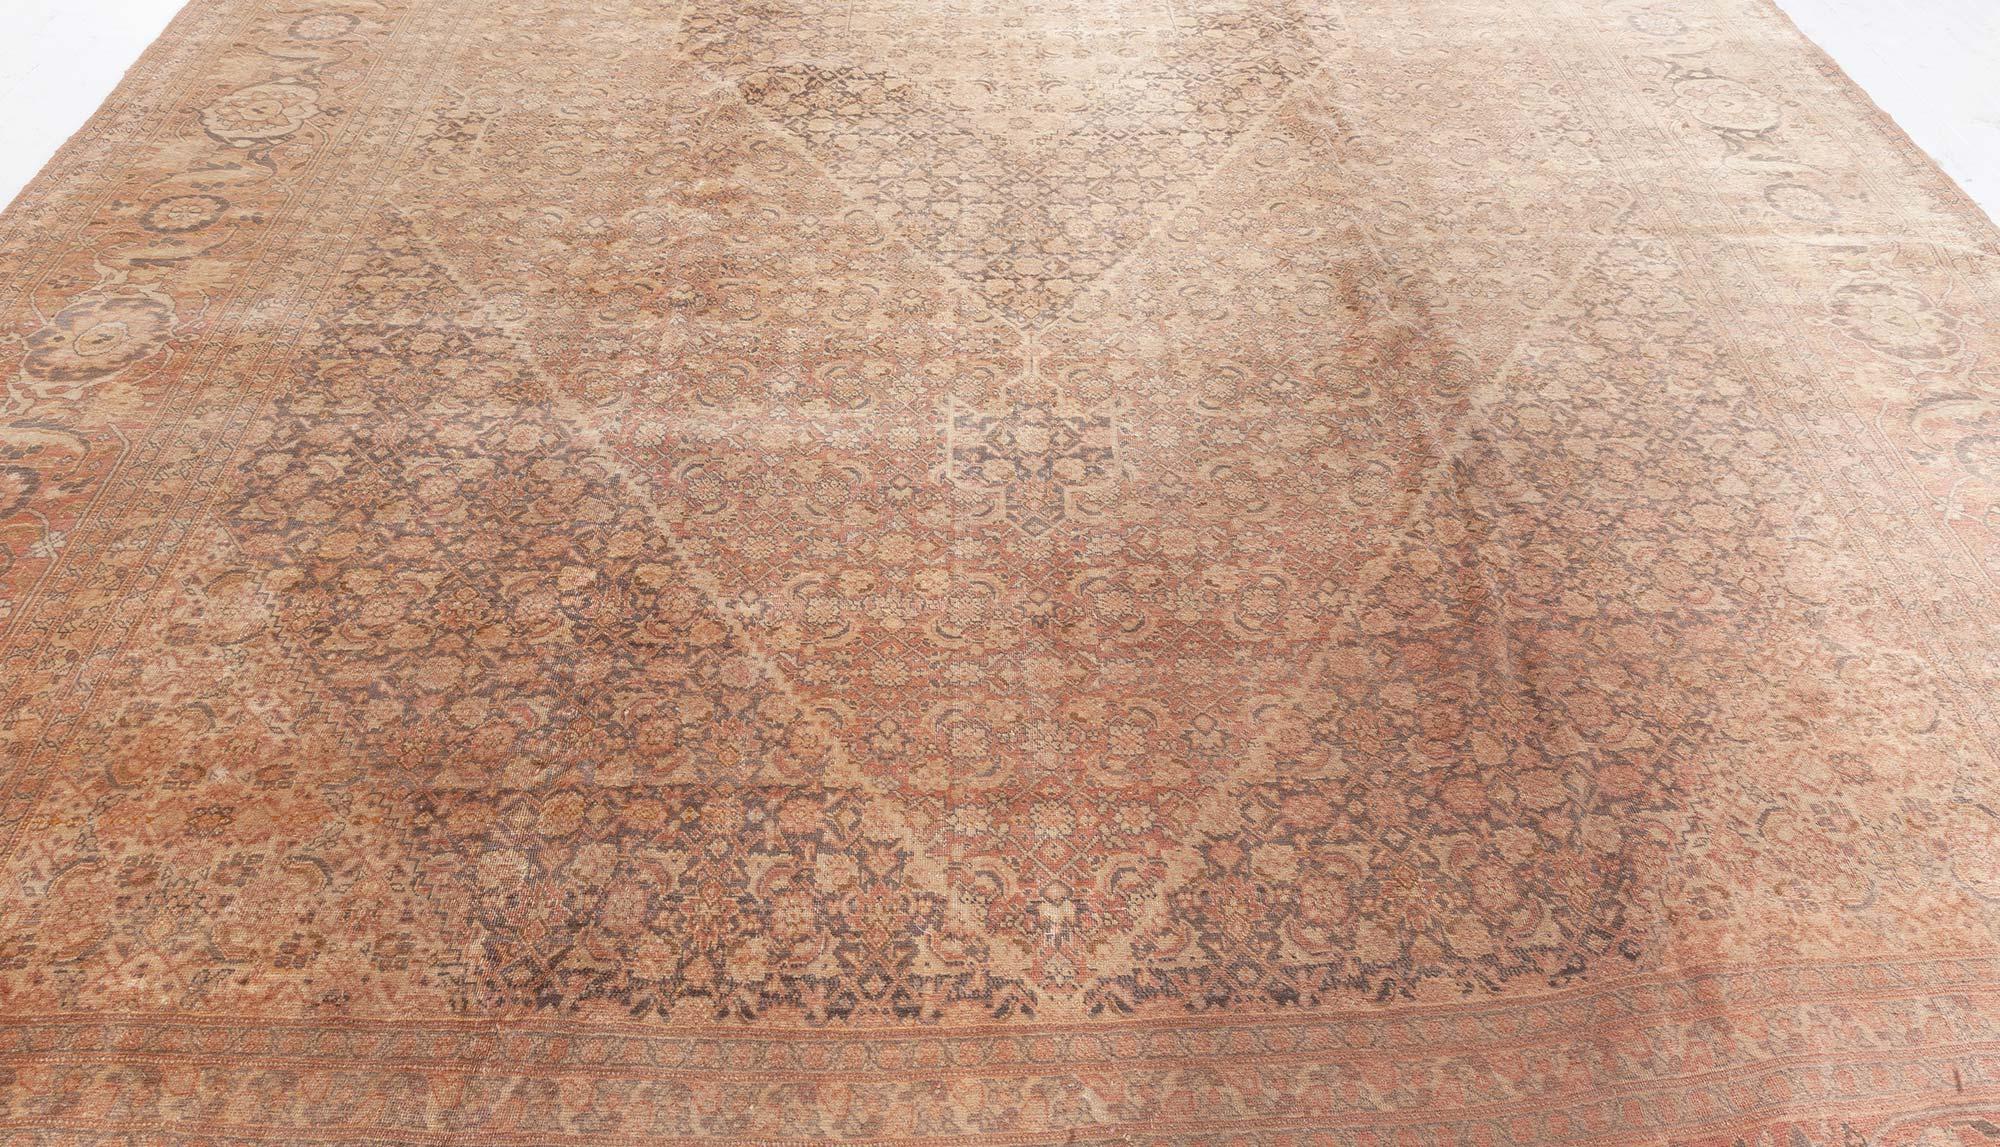 Antique Persian Tabriz Brown Handmade Wool Carpet
Size: 11'4